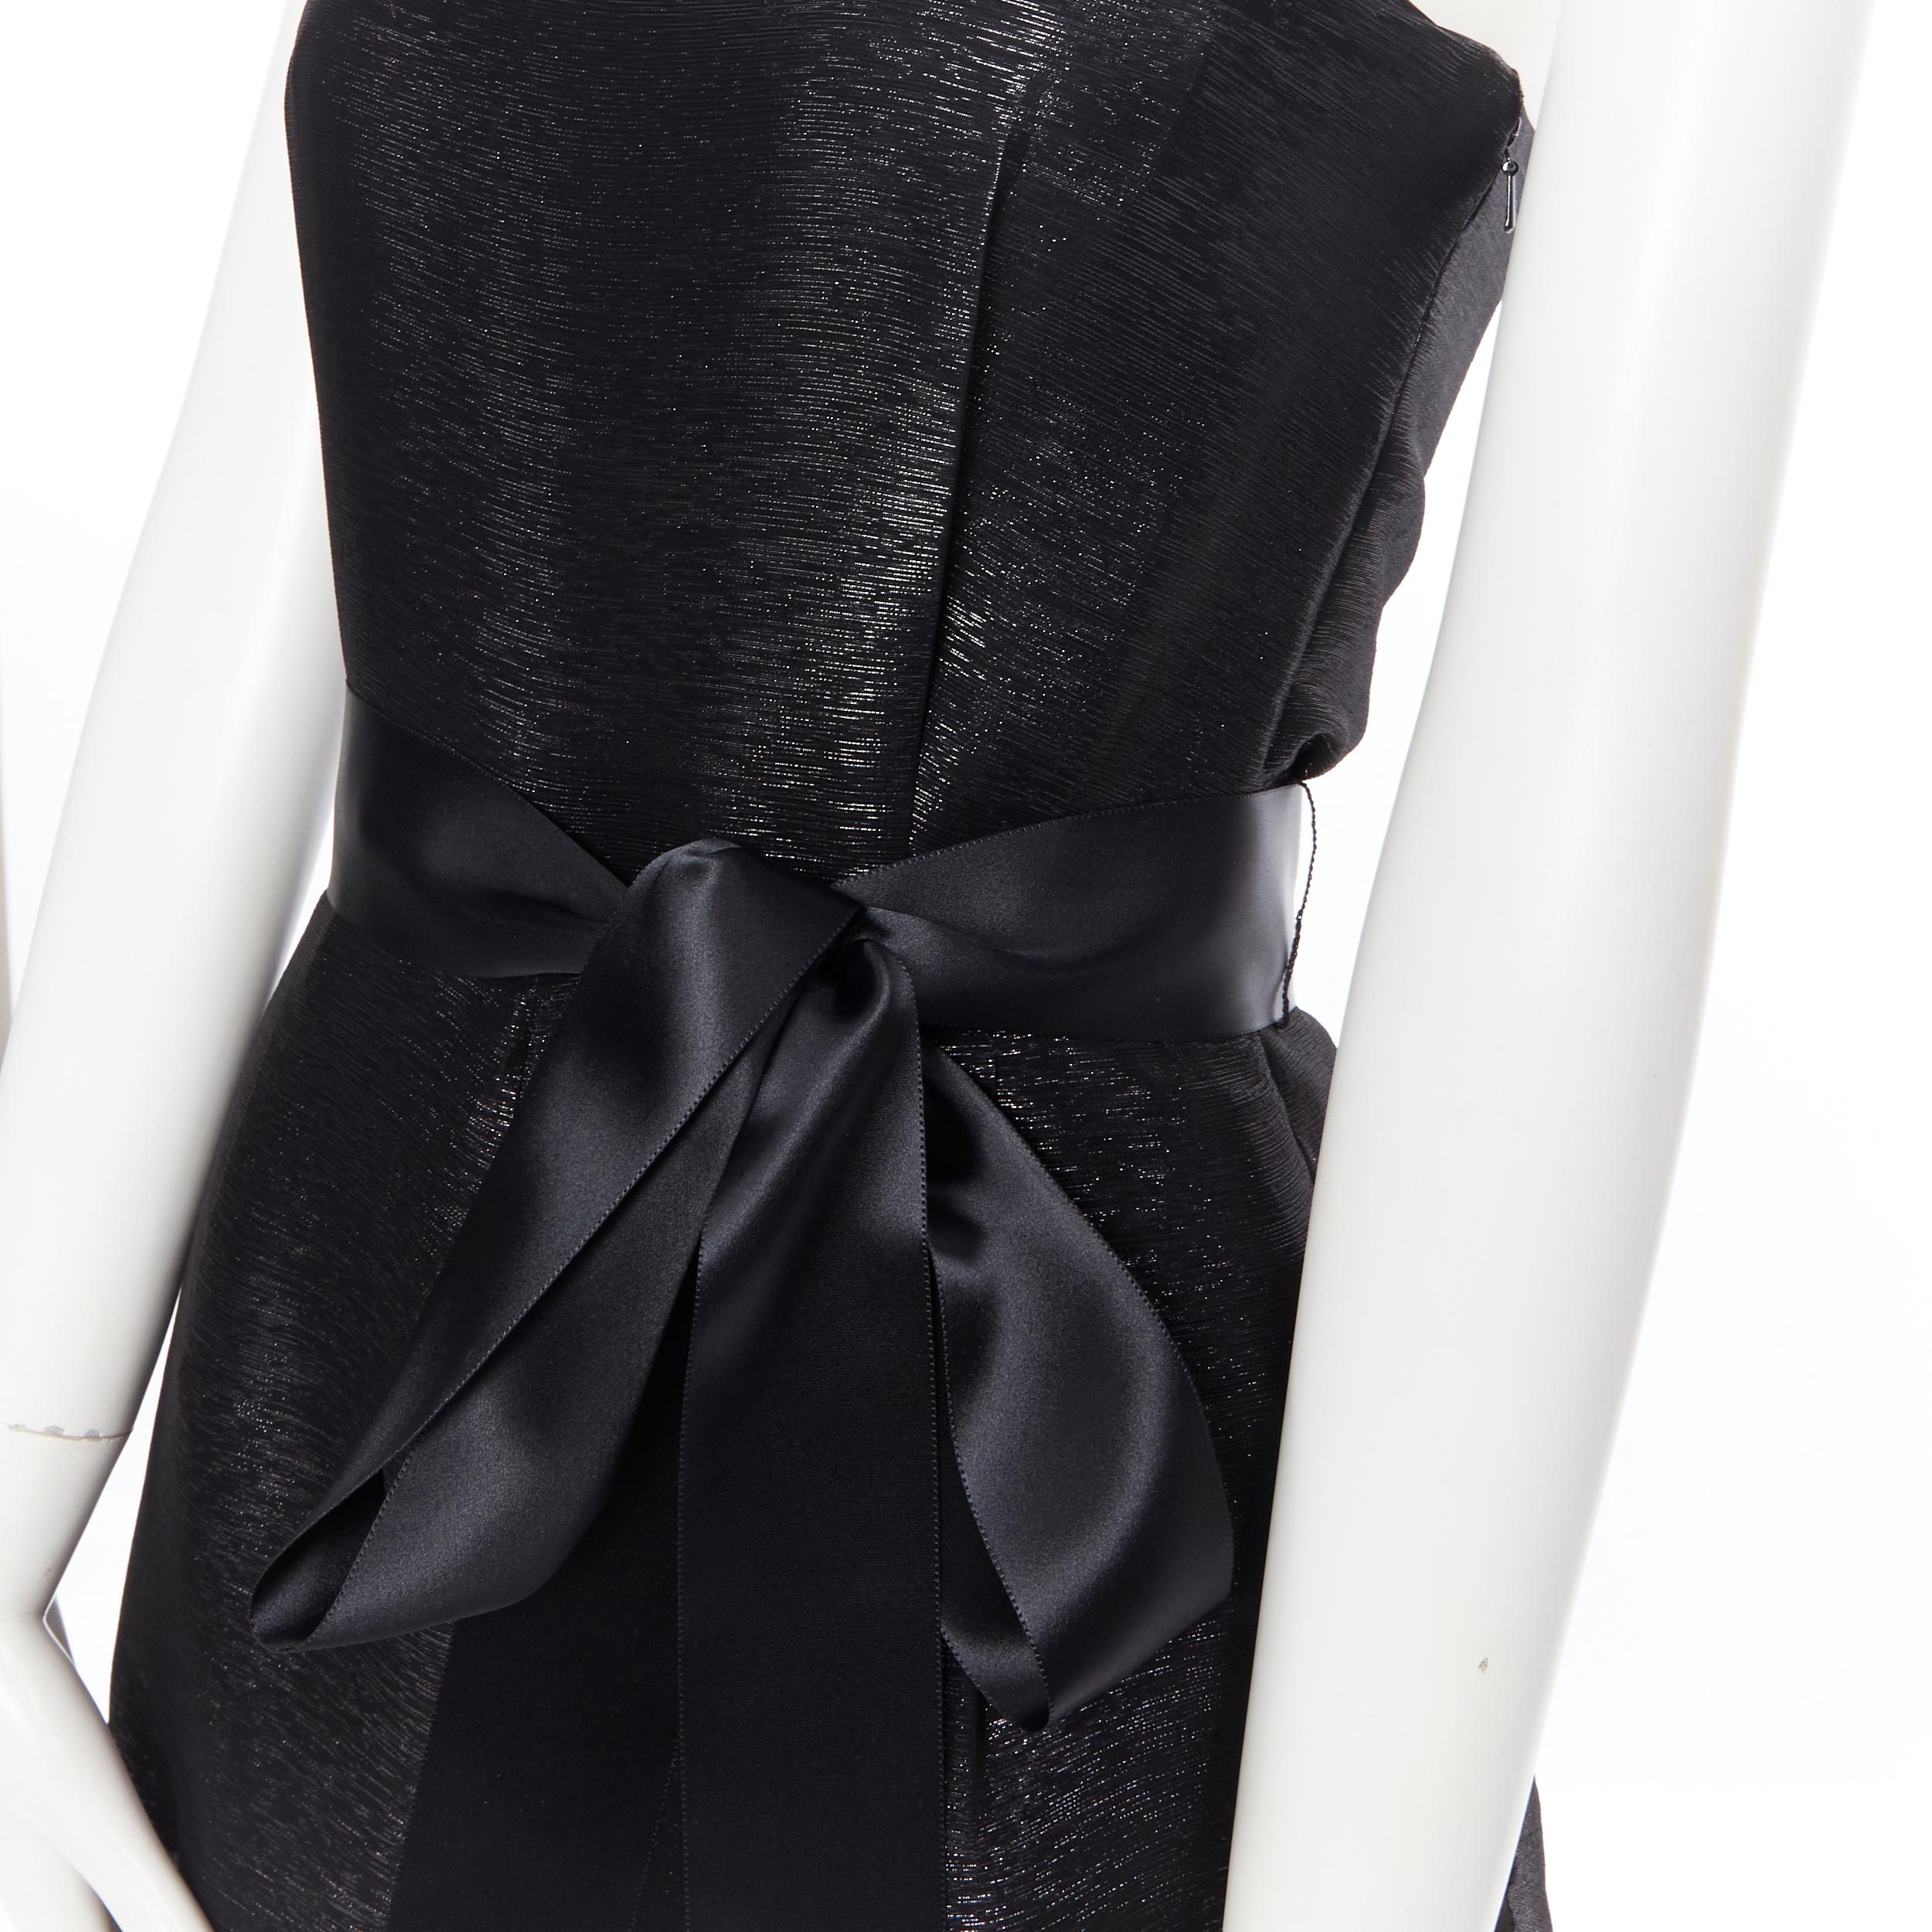 OSCAR DE LA RENTA 2014 black metallic silk blend corset bust belted jumpsuit US2
Brand: Oscar de la Renta
Designer: Oscar de la Renta
Collection: Pre Fall 2014
Model Name / Style: Jumpsuit
Material: Silk blend
Color: Black
Pattern: Solid
Closure: